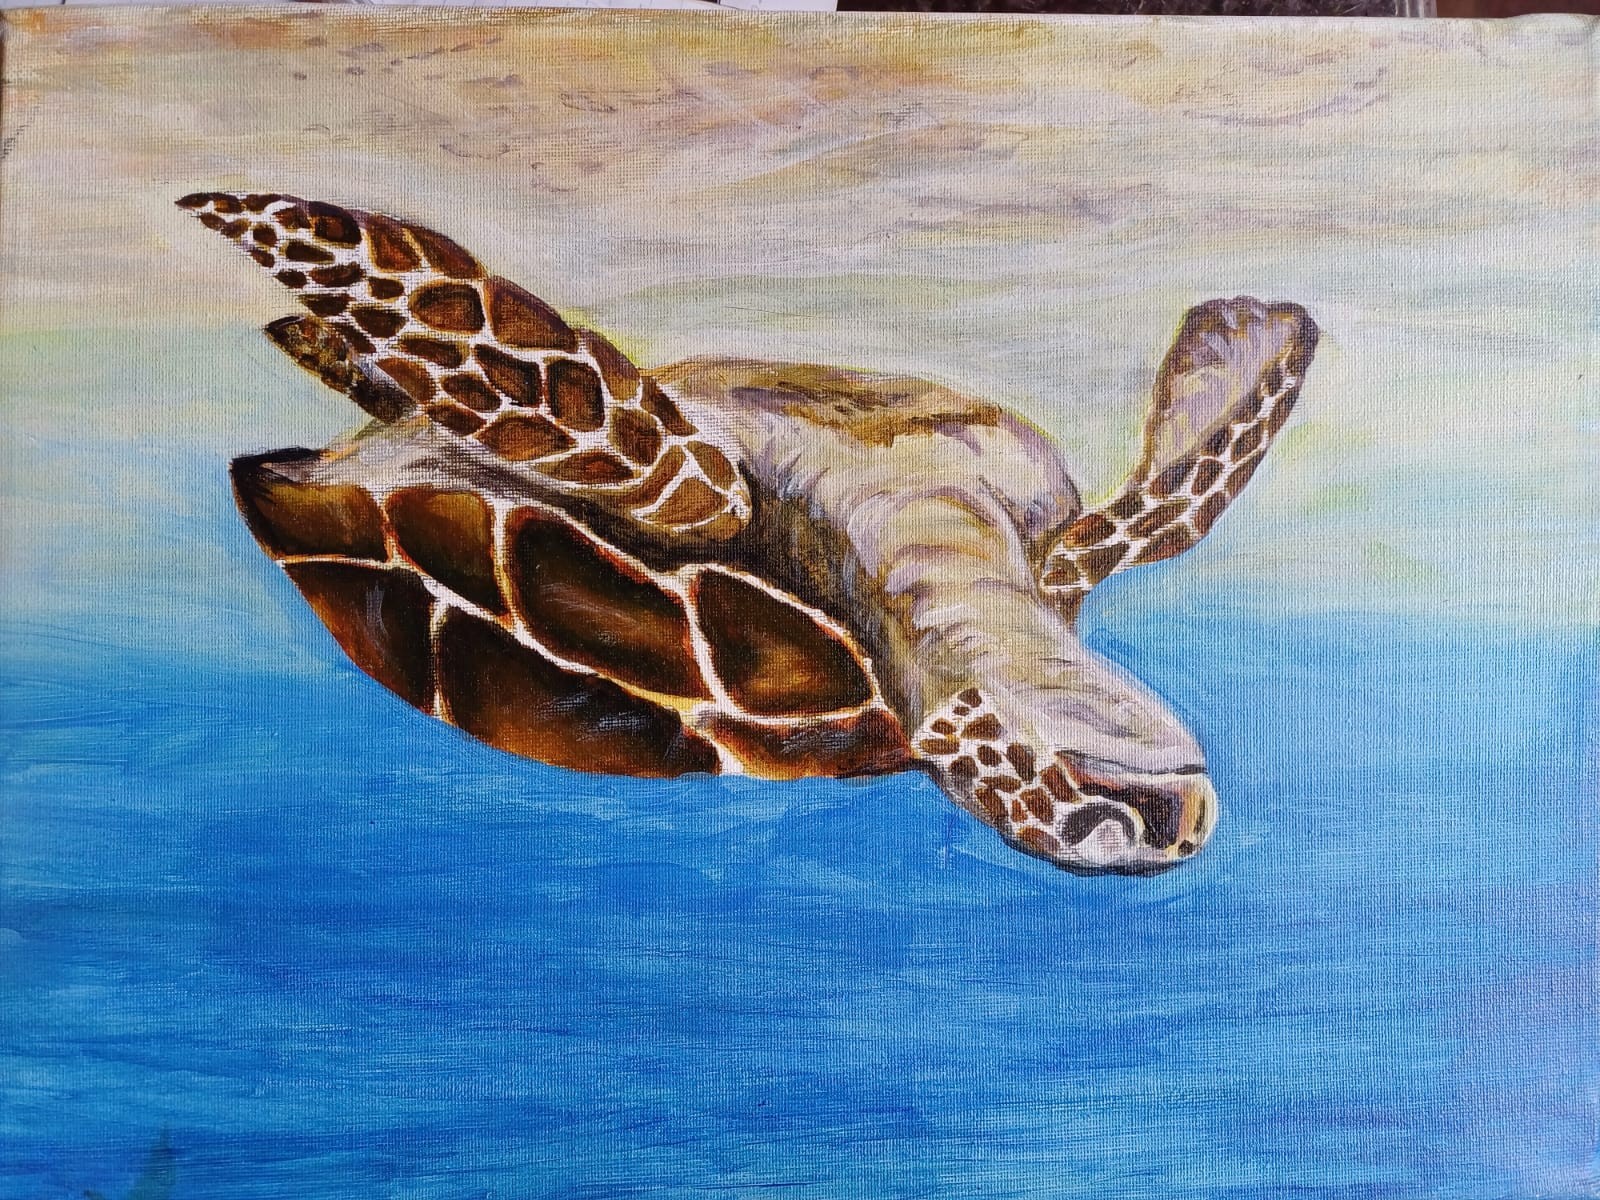 Turtle by Sahana Thiyagaraja